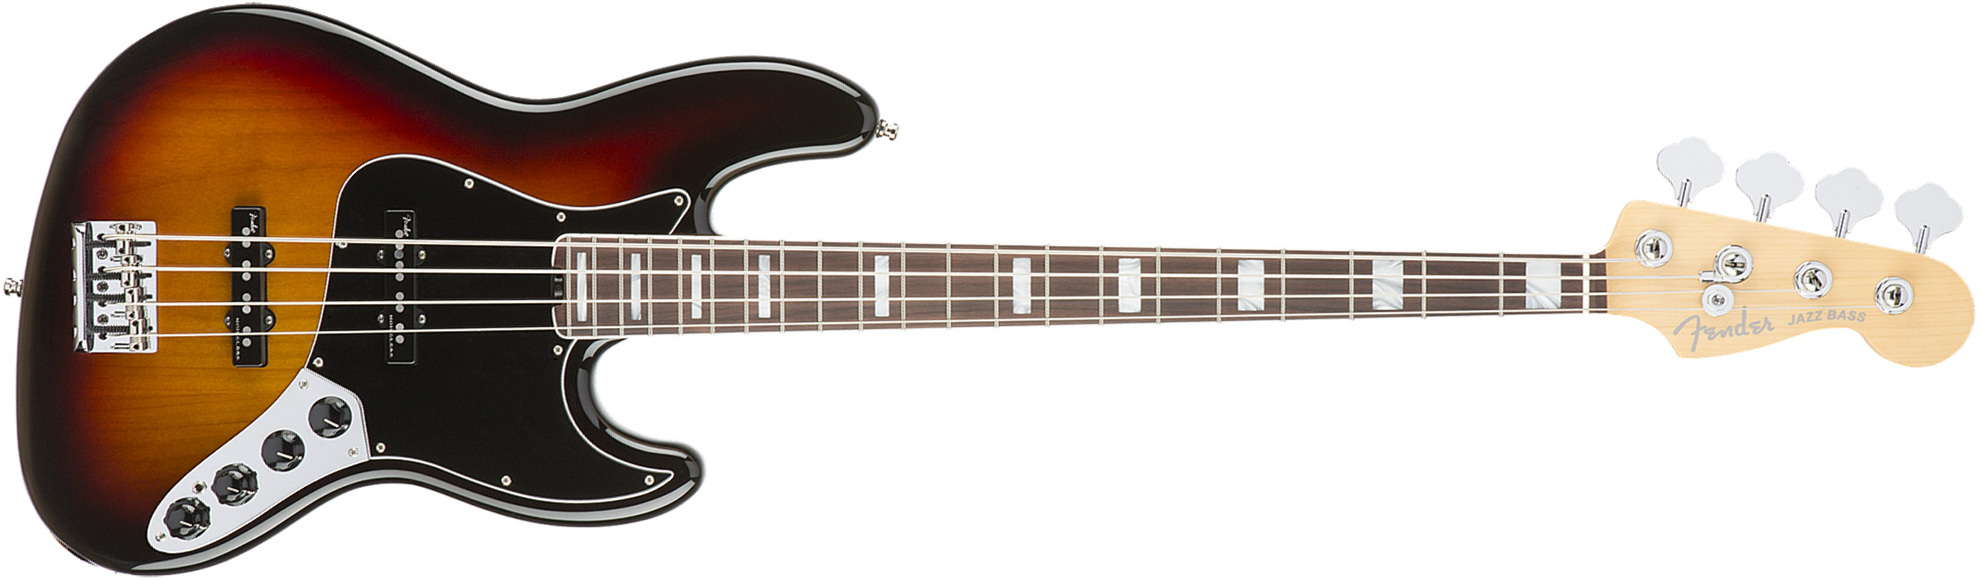 Fender Jazz Bass American Elite 2016 (usa, Rw) - 3-color Sunburst - Solid body elektrische bas - Main picture